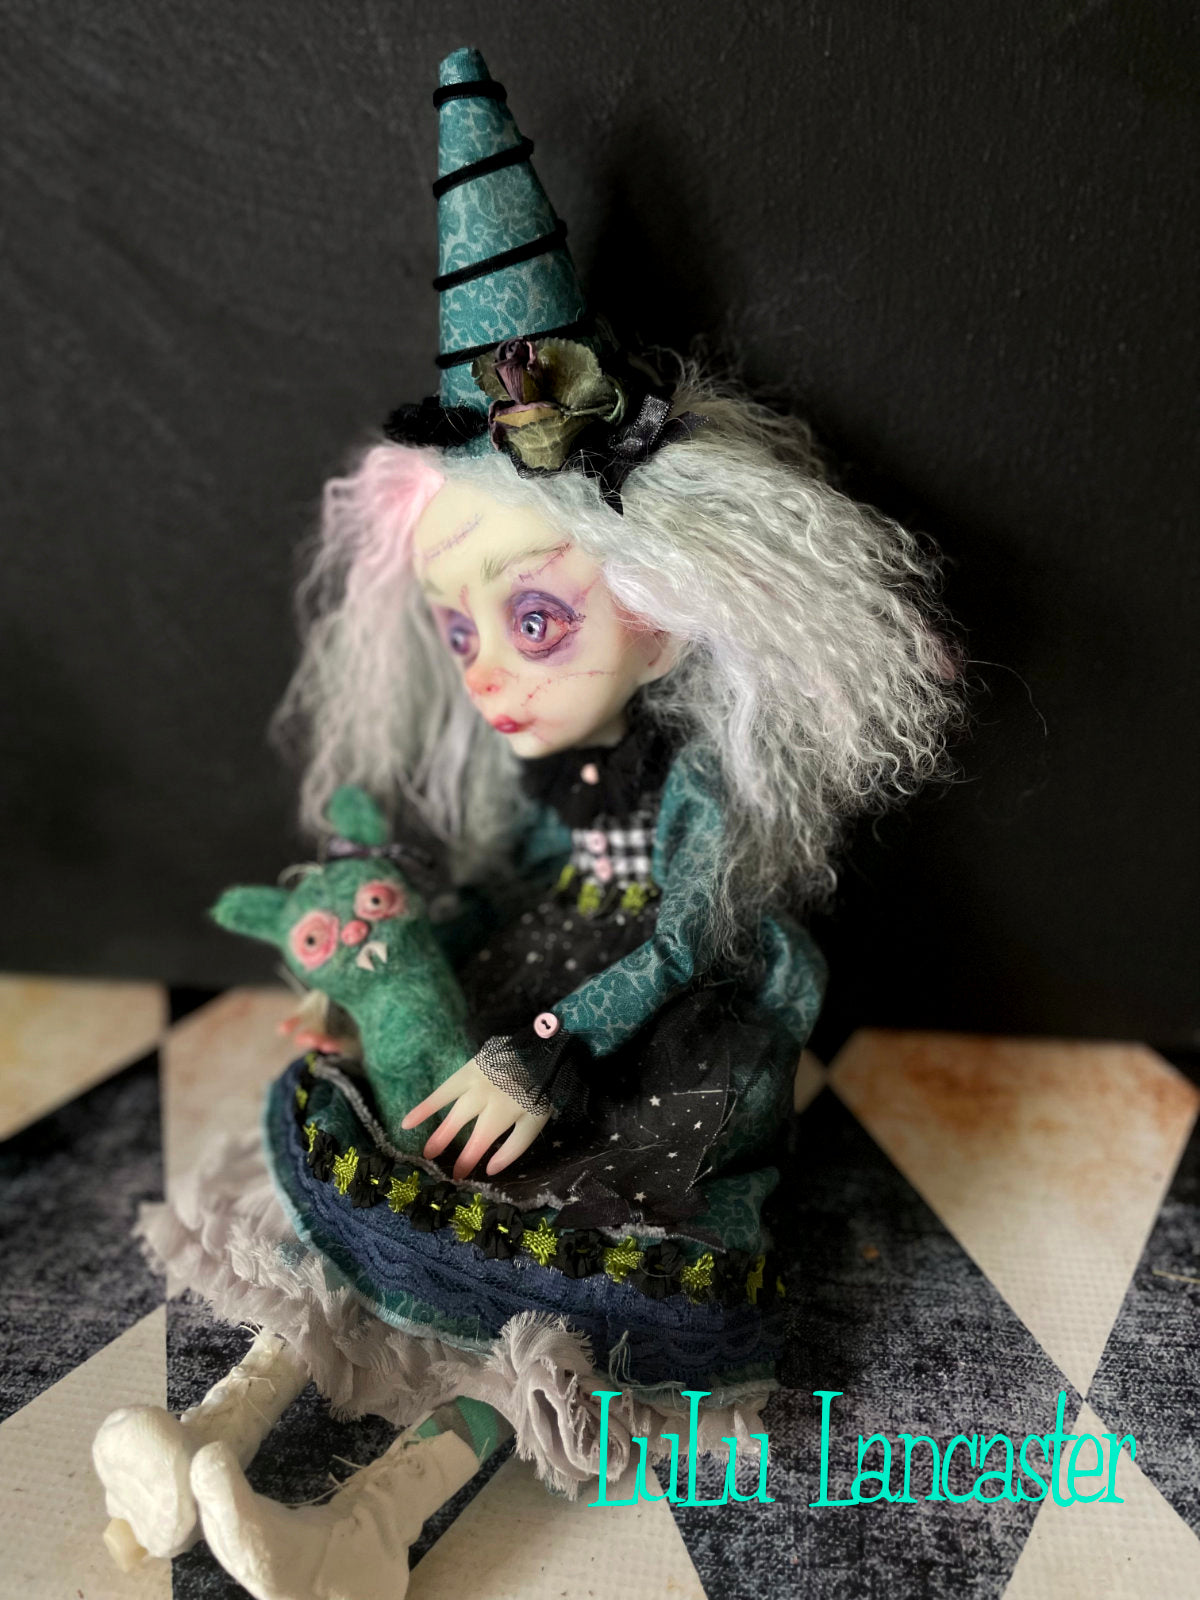 Stasia Stitches sad Goth Original LuLu Lancaster Art Doll